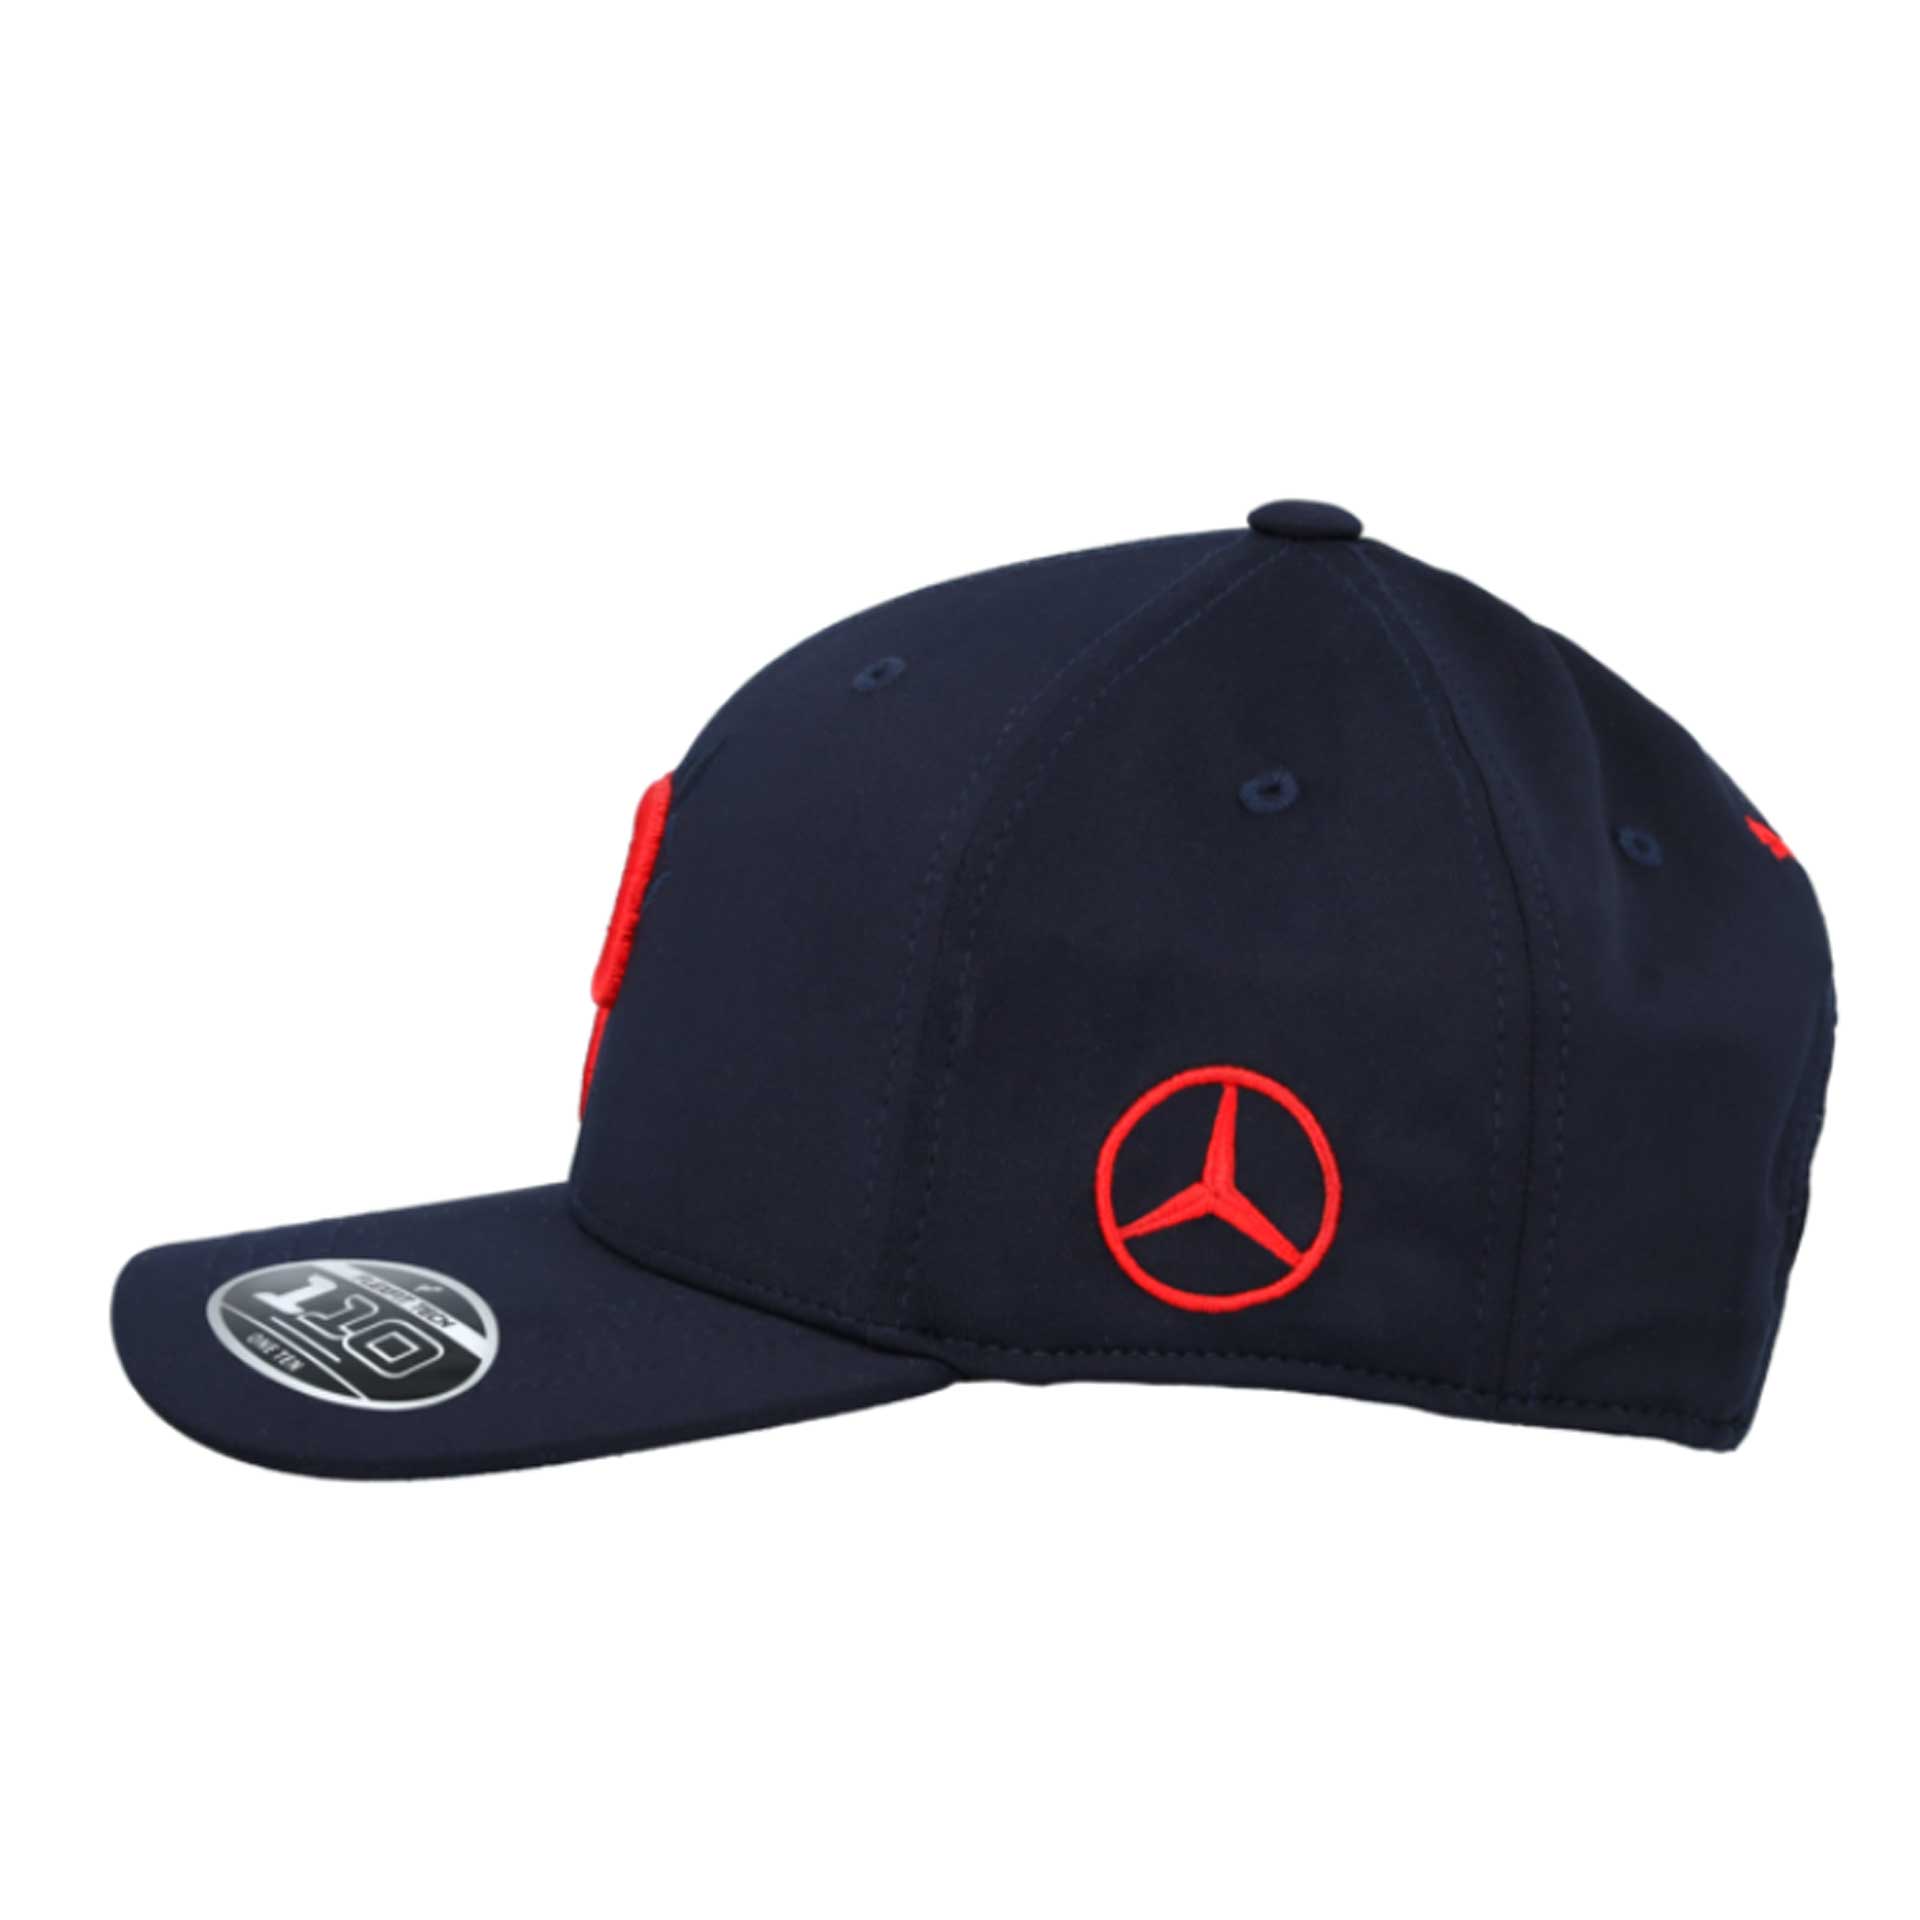 Mercedes-Benz Golf-Cap navy Basecap Kappe by PUMA